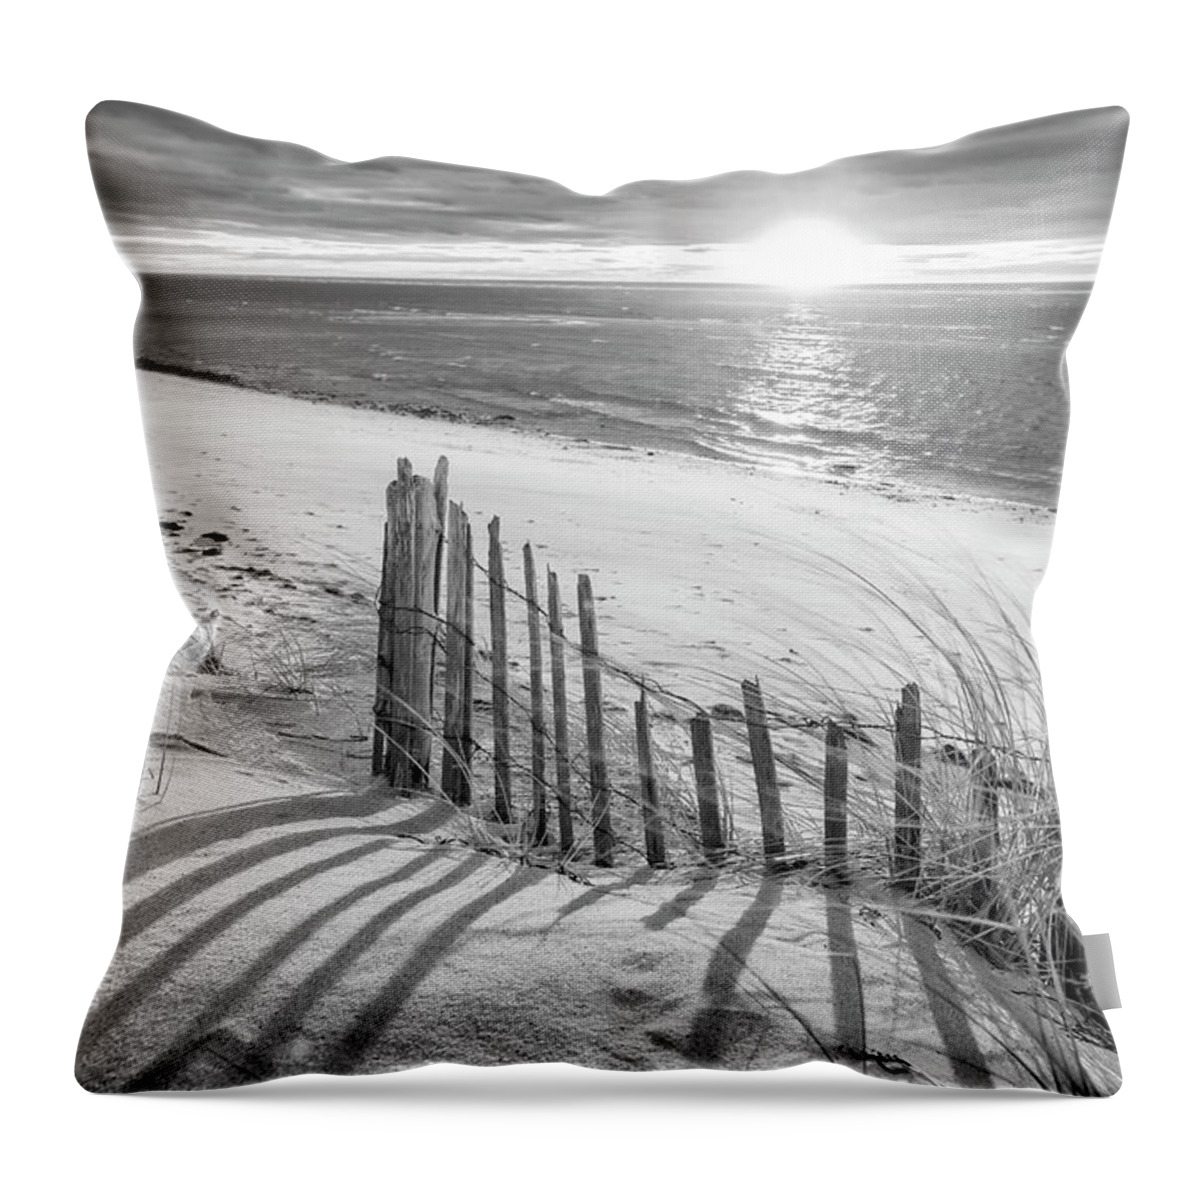 Cape Cod Beach Fence Throw Pillow featuring the photograph Cape Cod Beach Fence by Darius Aniunas